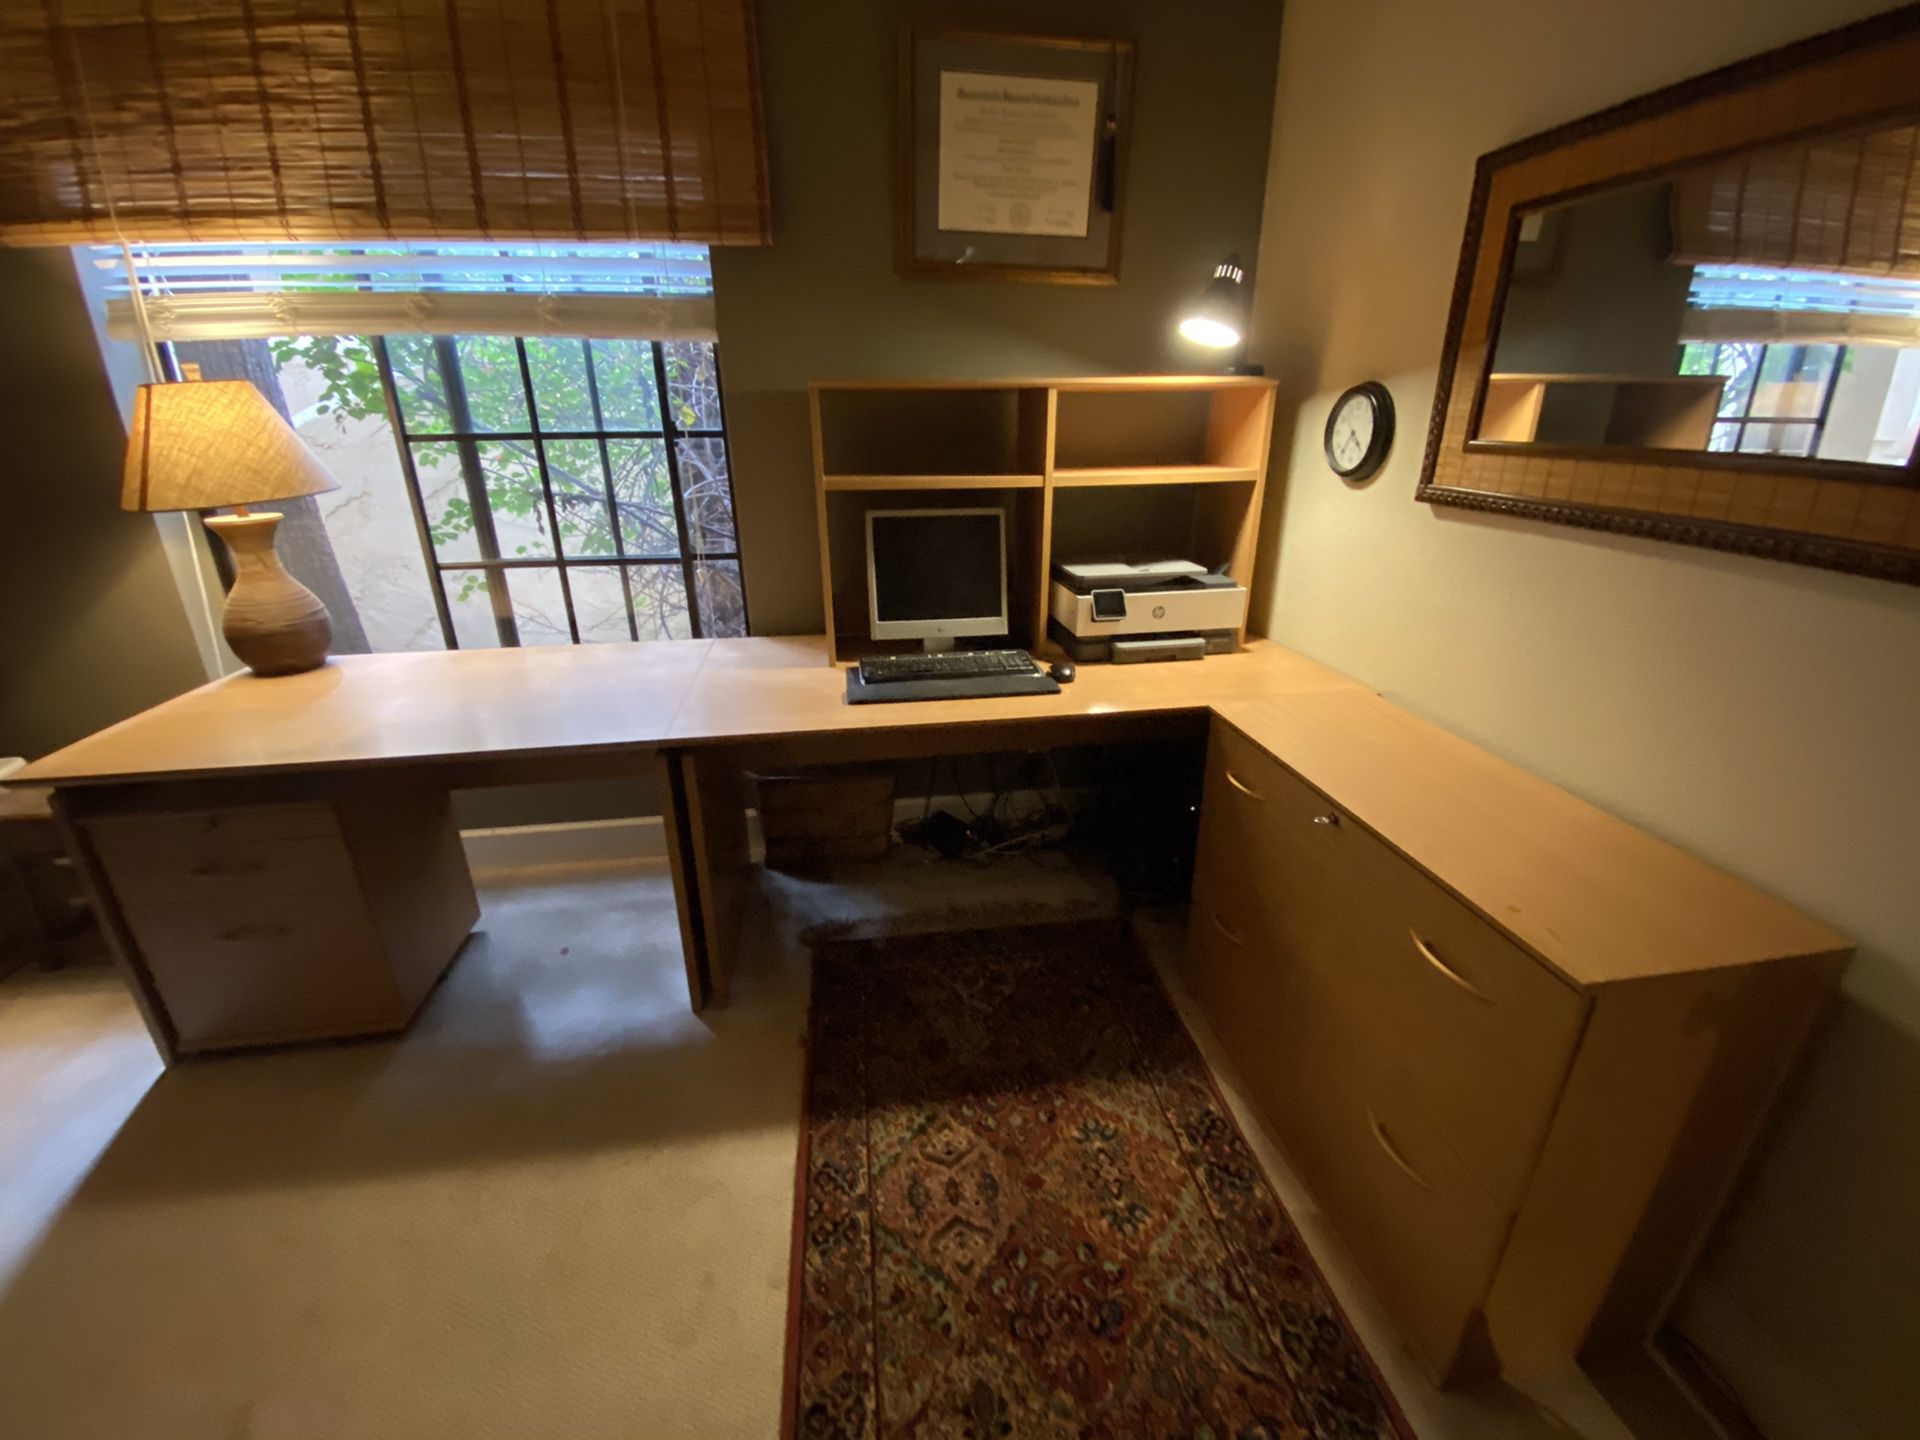 COPENHAGEN/DENMARKET complete office suite: 2 desks, 2 filing cabinets, and shelving units. ONLY $275